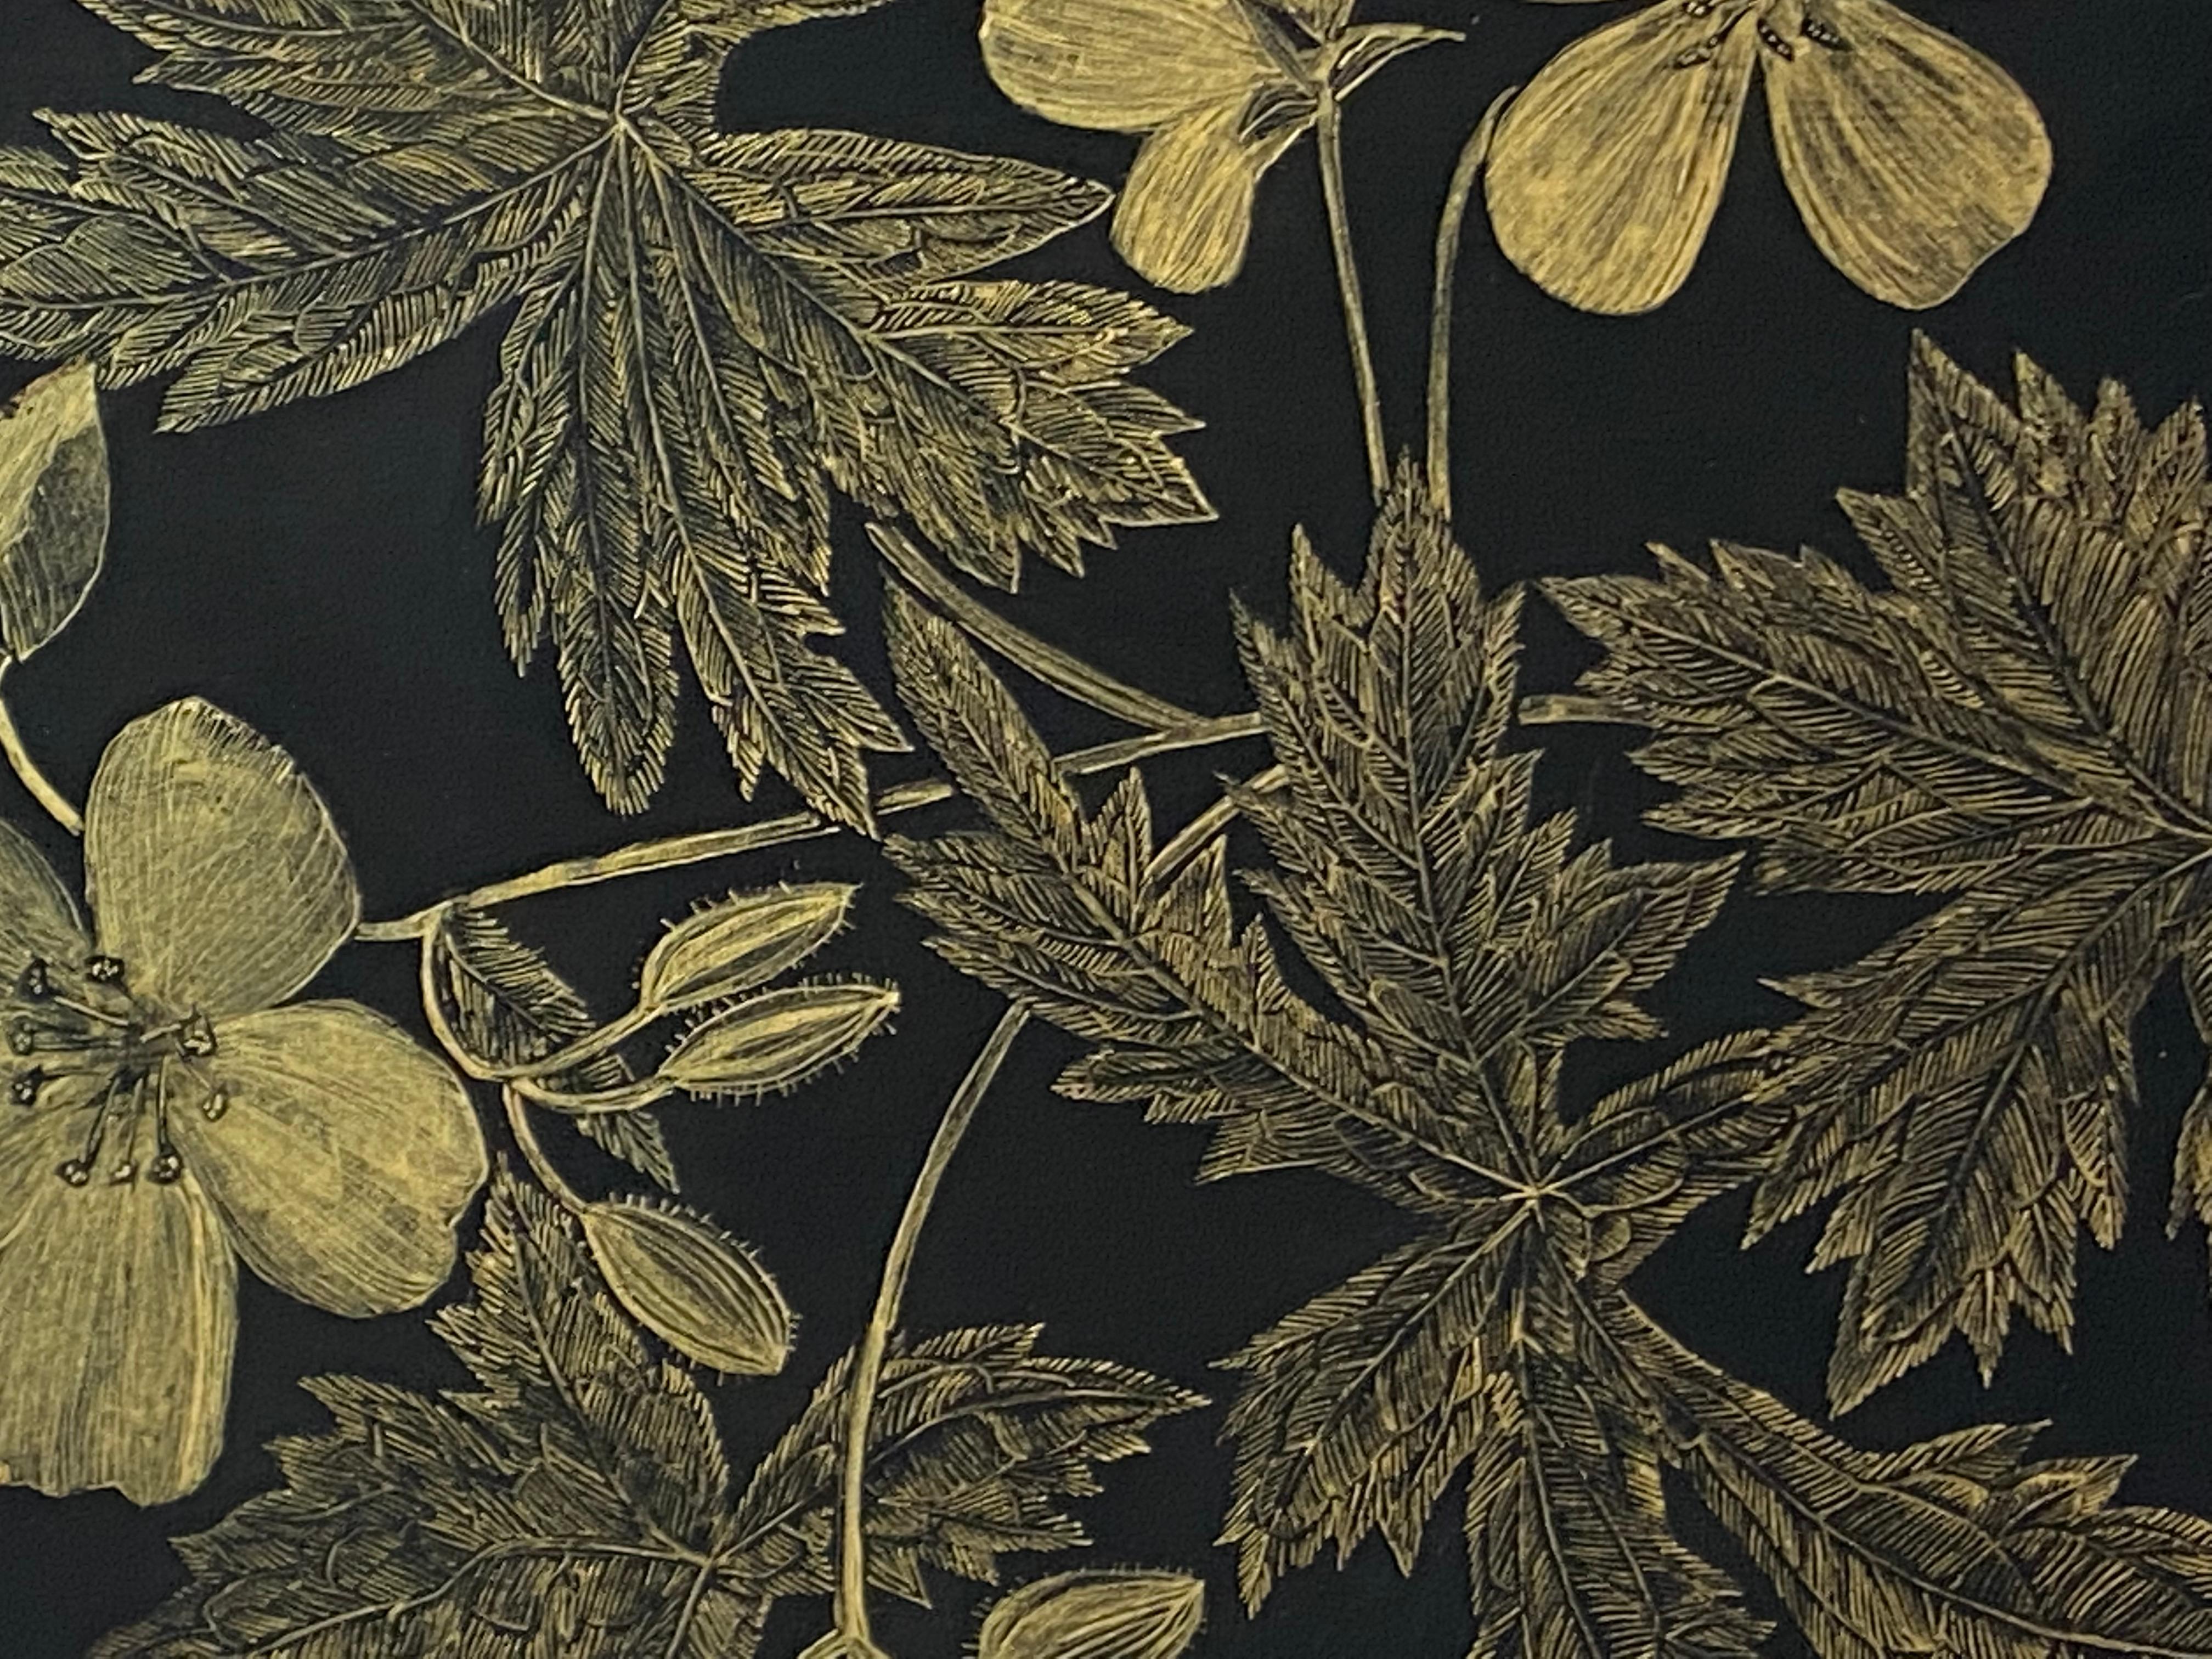 Wild Geranium, Botanical Painting on Black Panel with Gold Flowers, Leaves, Stem 4